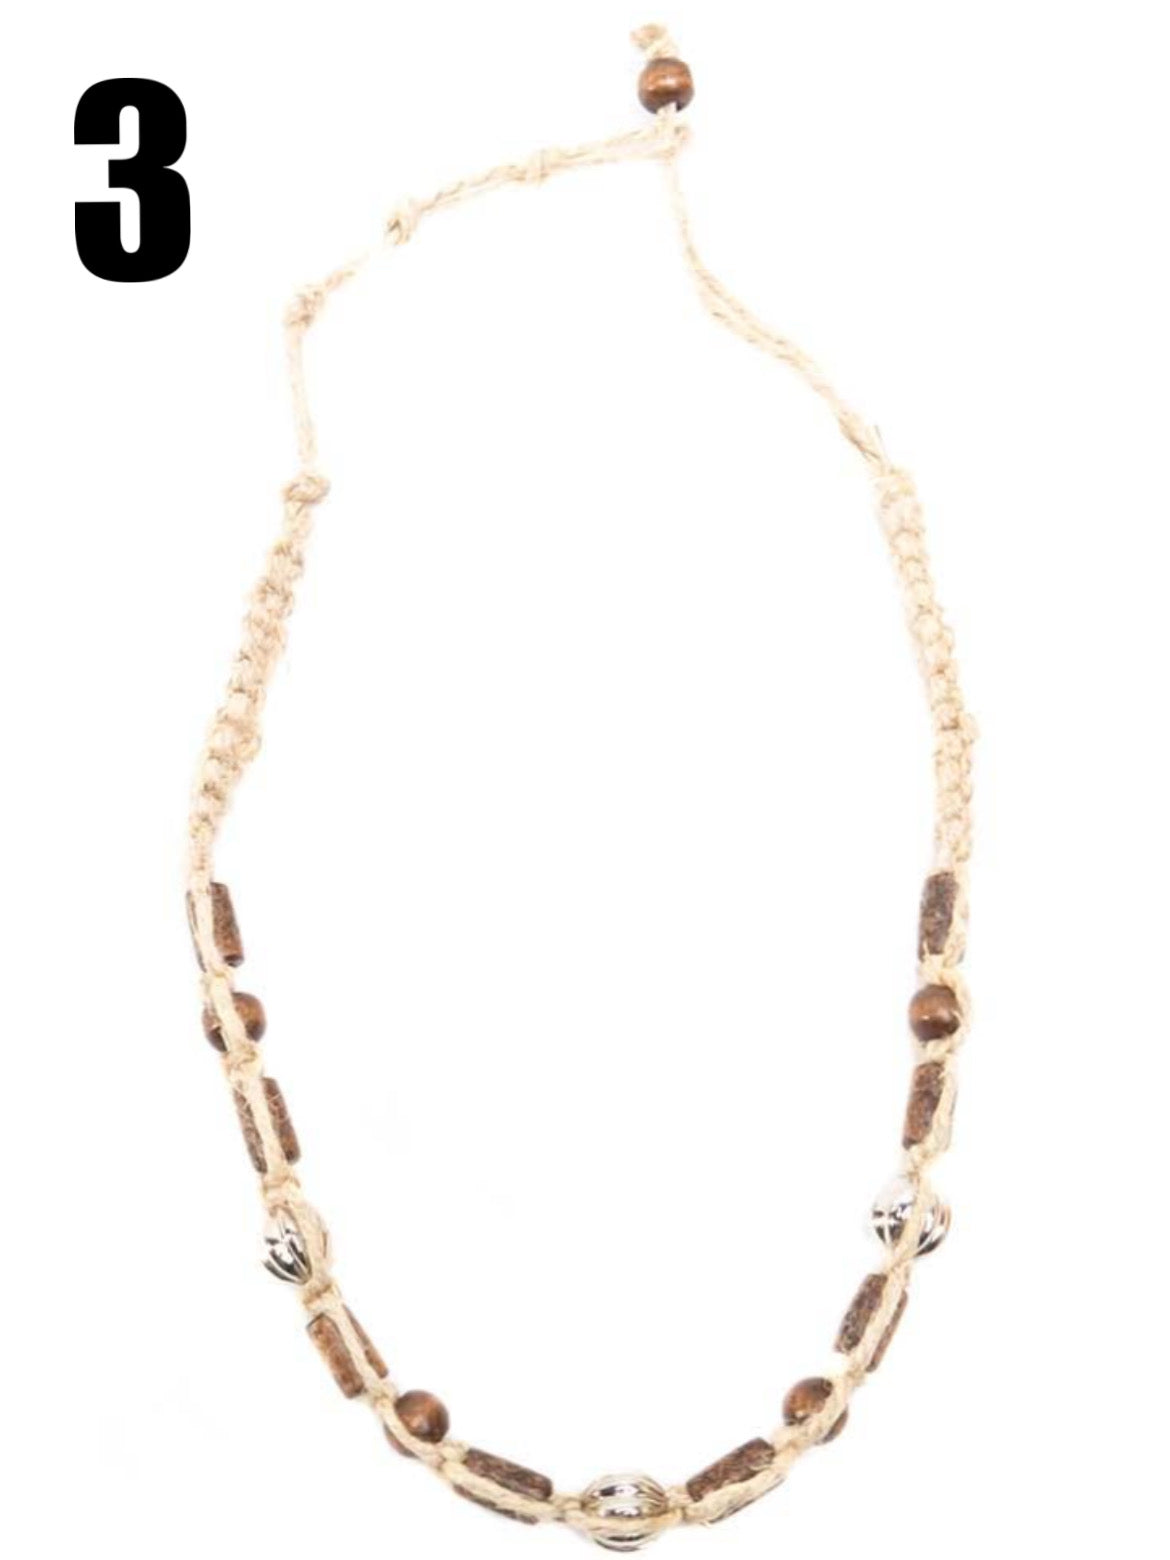 Hemp Necklace With Metal Beads